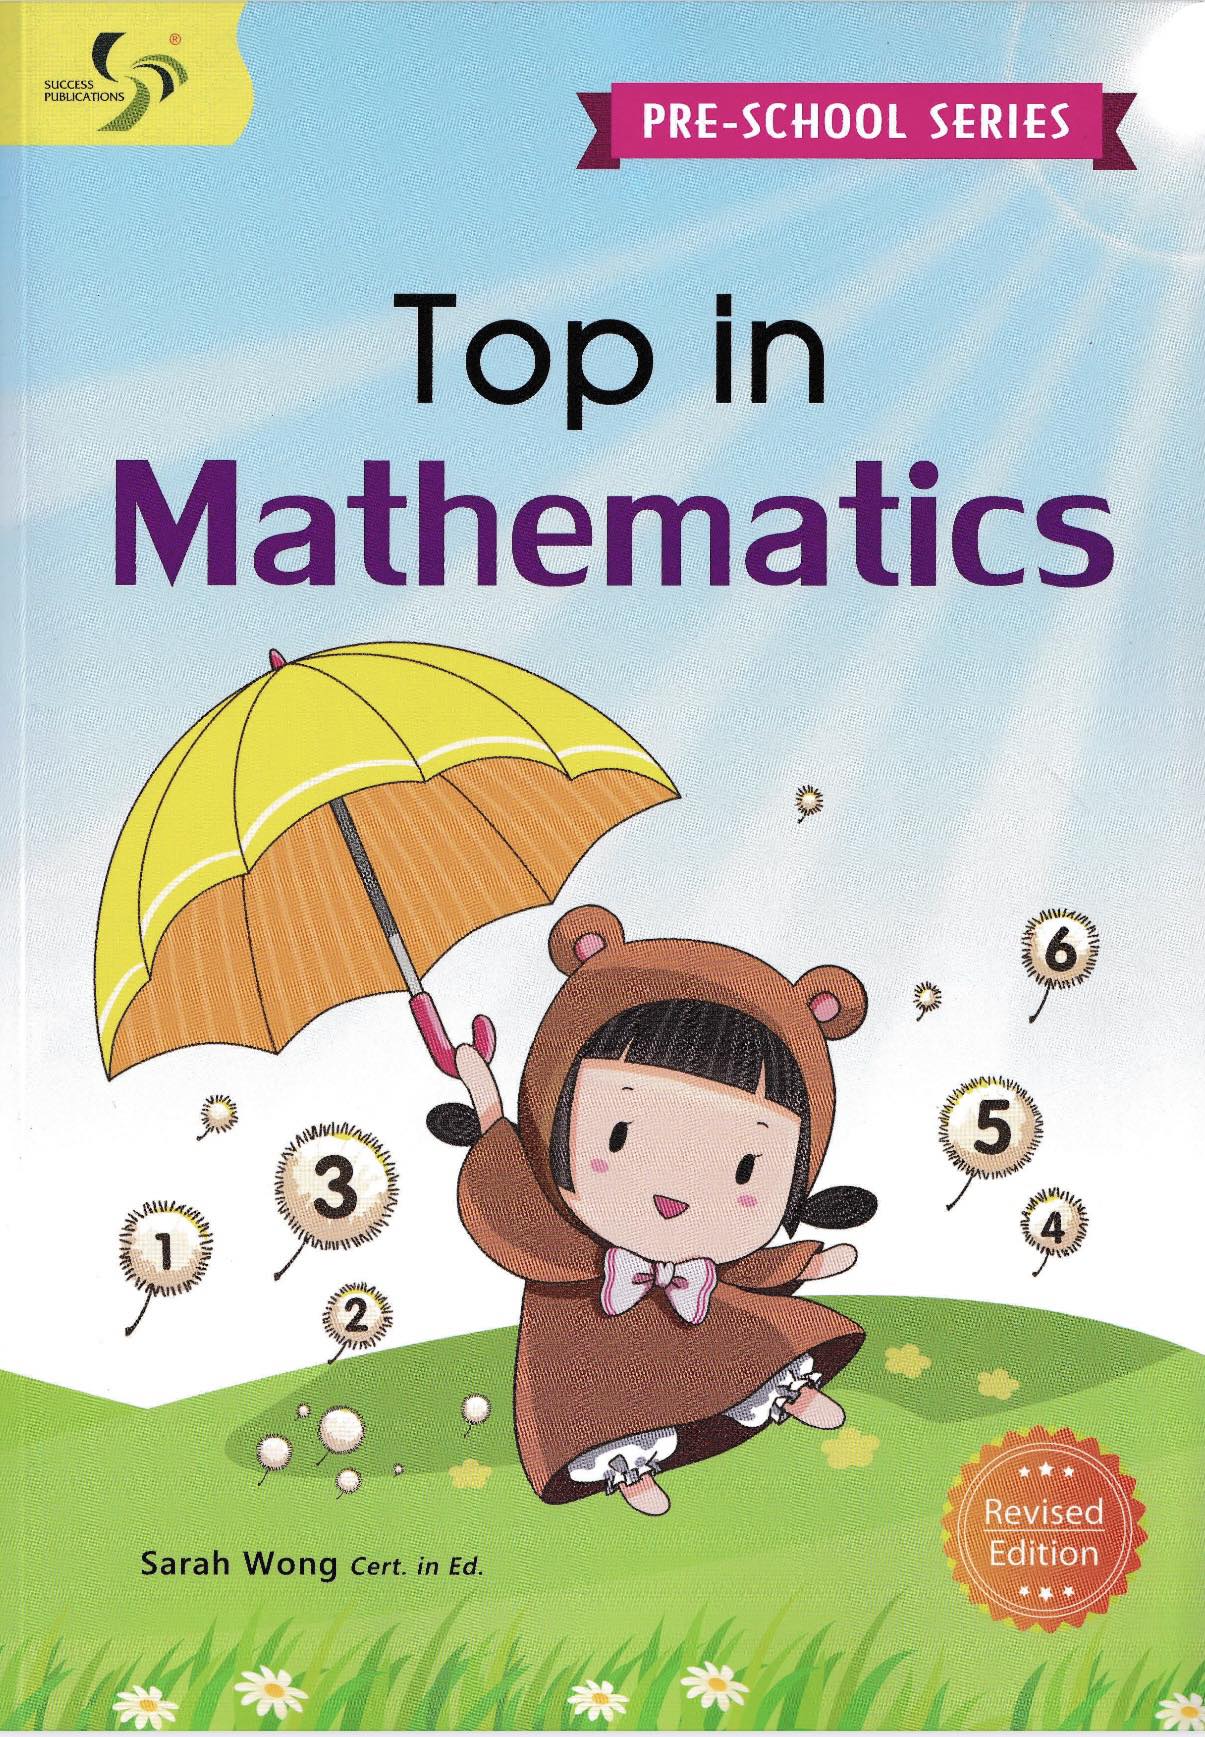 Pre-school Series Top in Mathematics